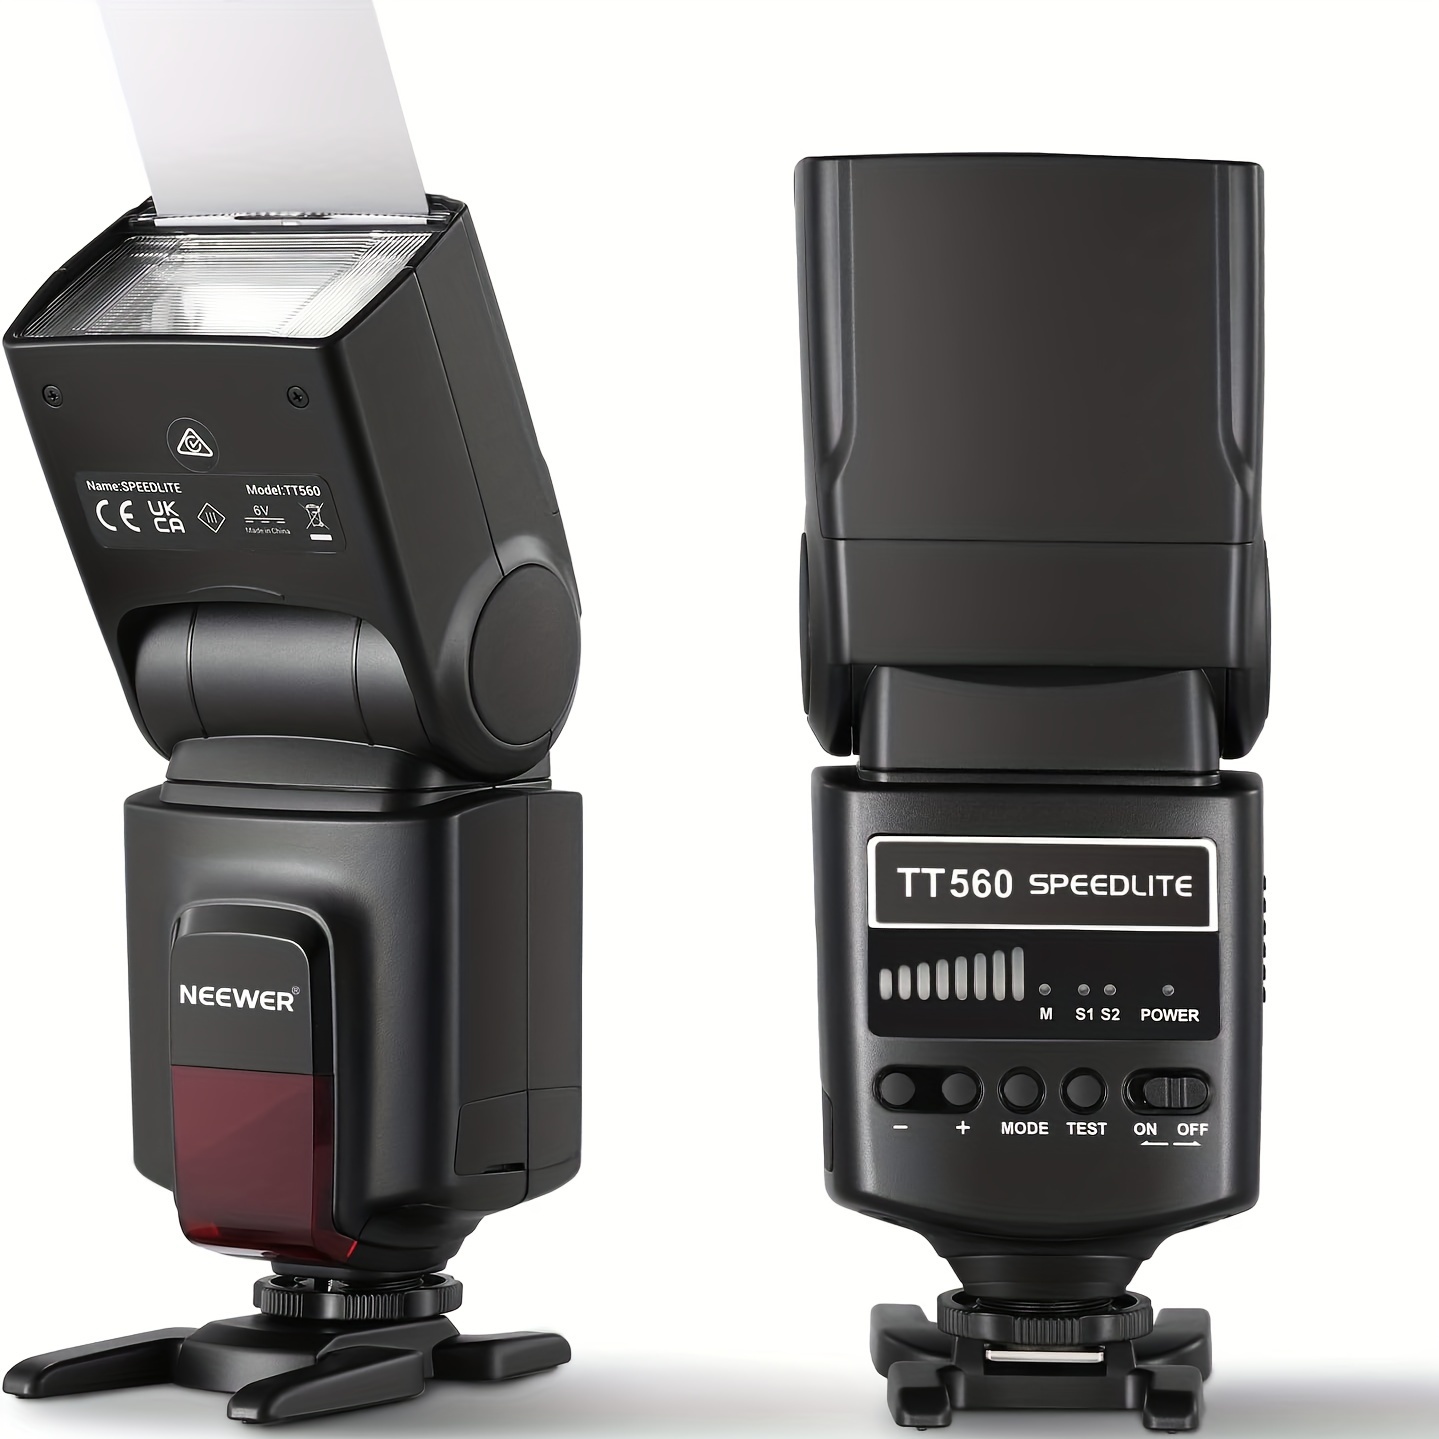 Flash Godox V850III Speedlite Sistema inalámbrico para Canon, Nikon